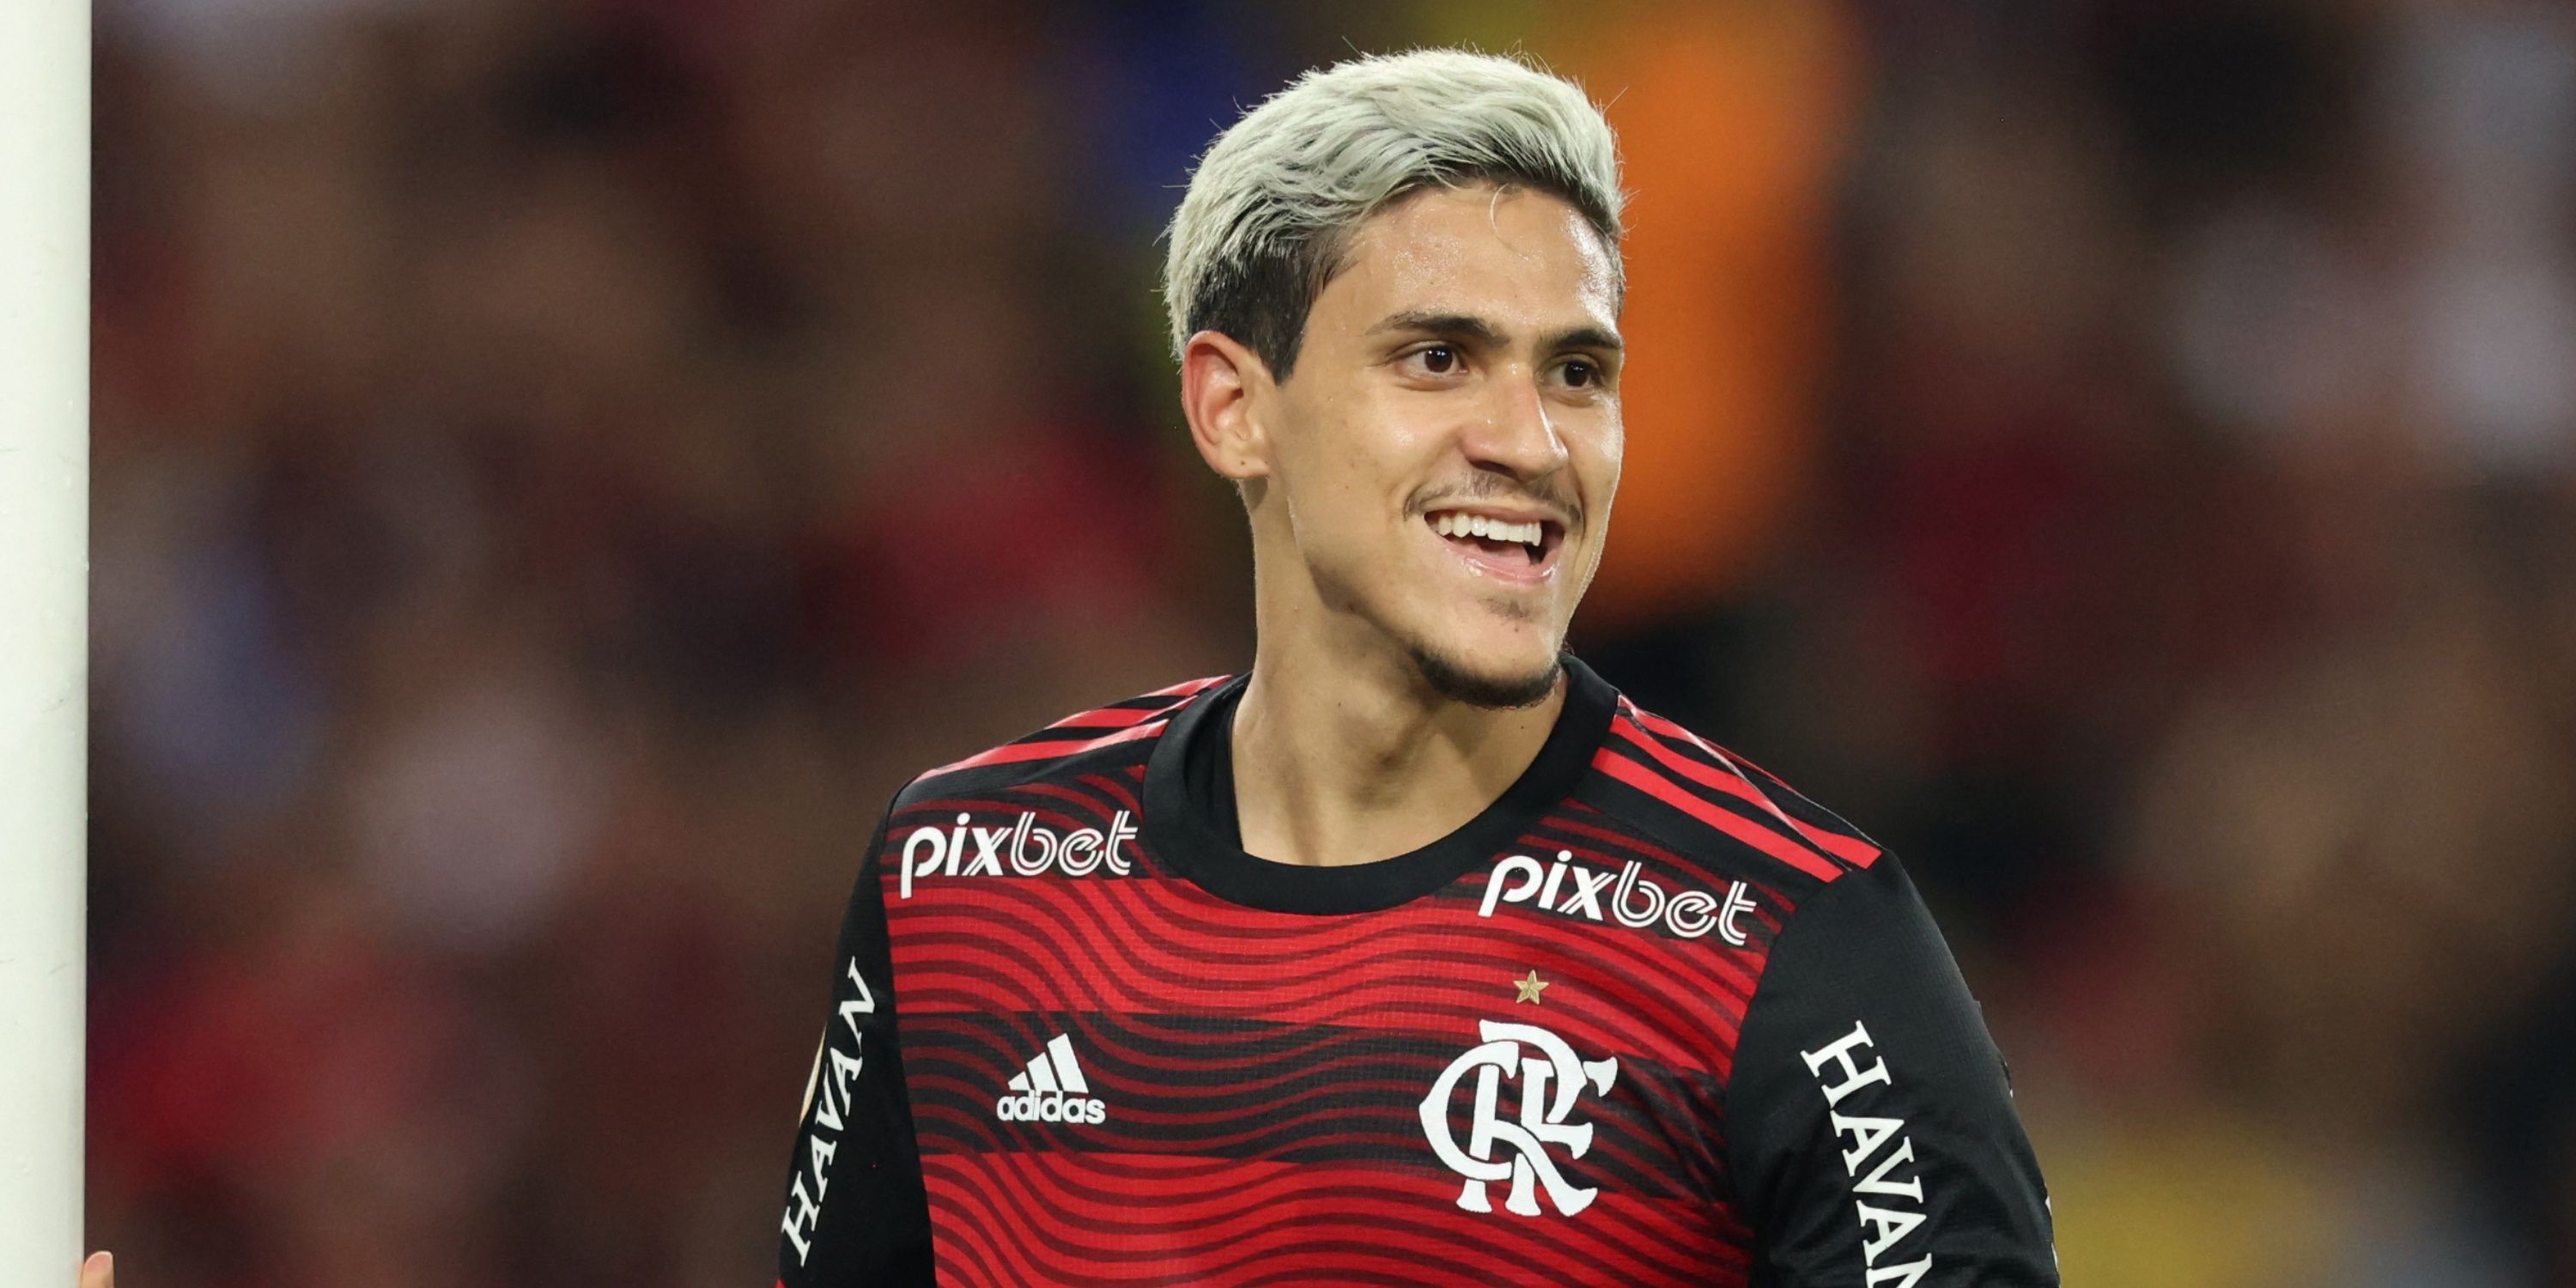 Pedro plays for Flamengo